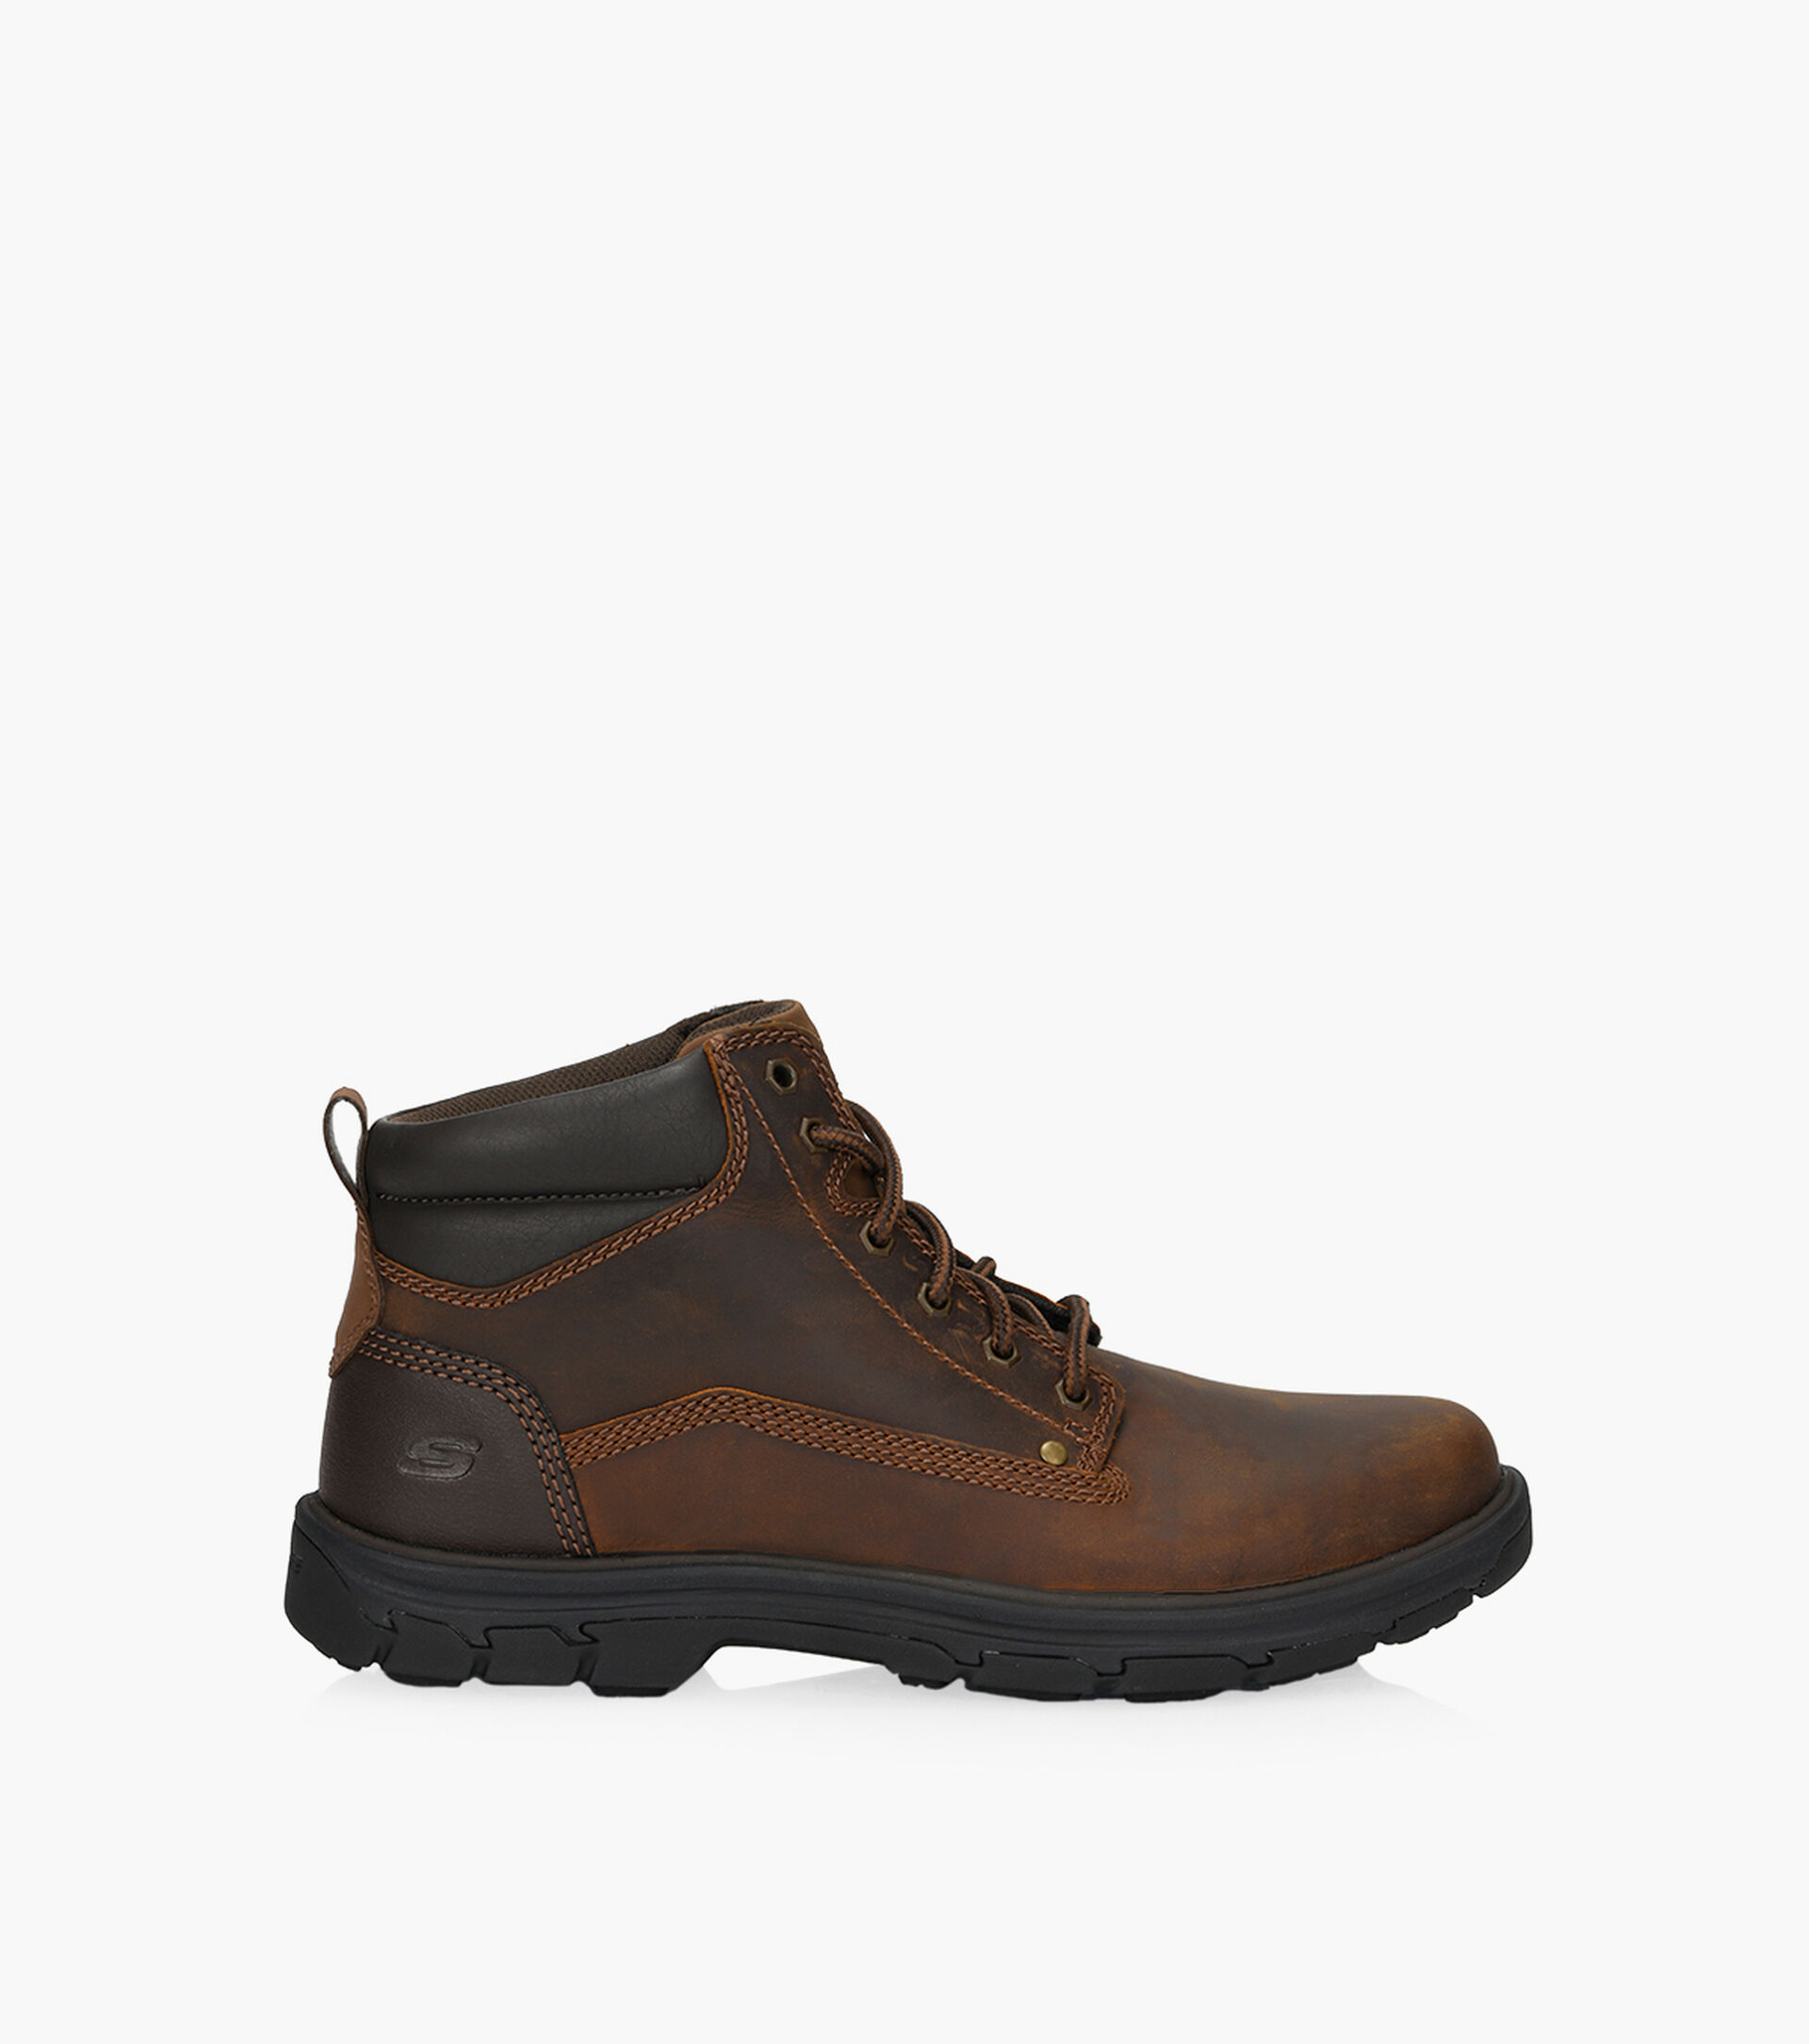 SKECHERS SEGMENT GARNET - Leather | Browns Shoes